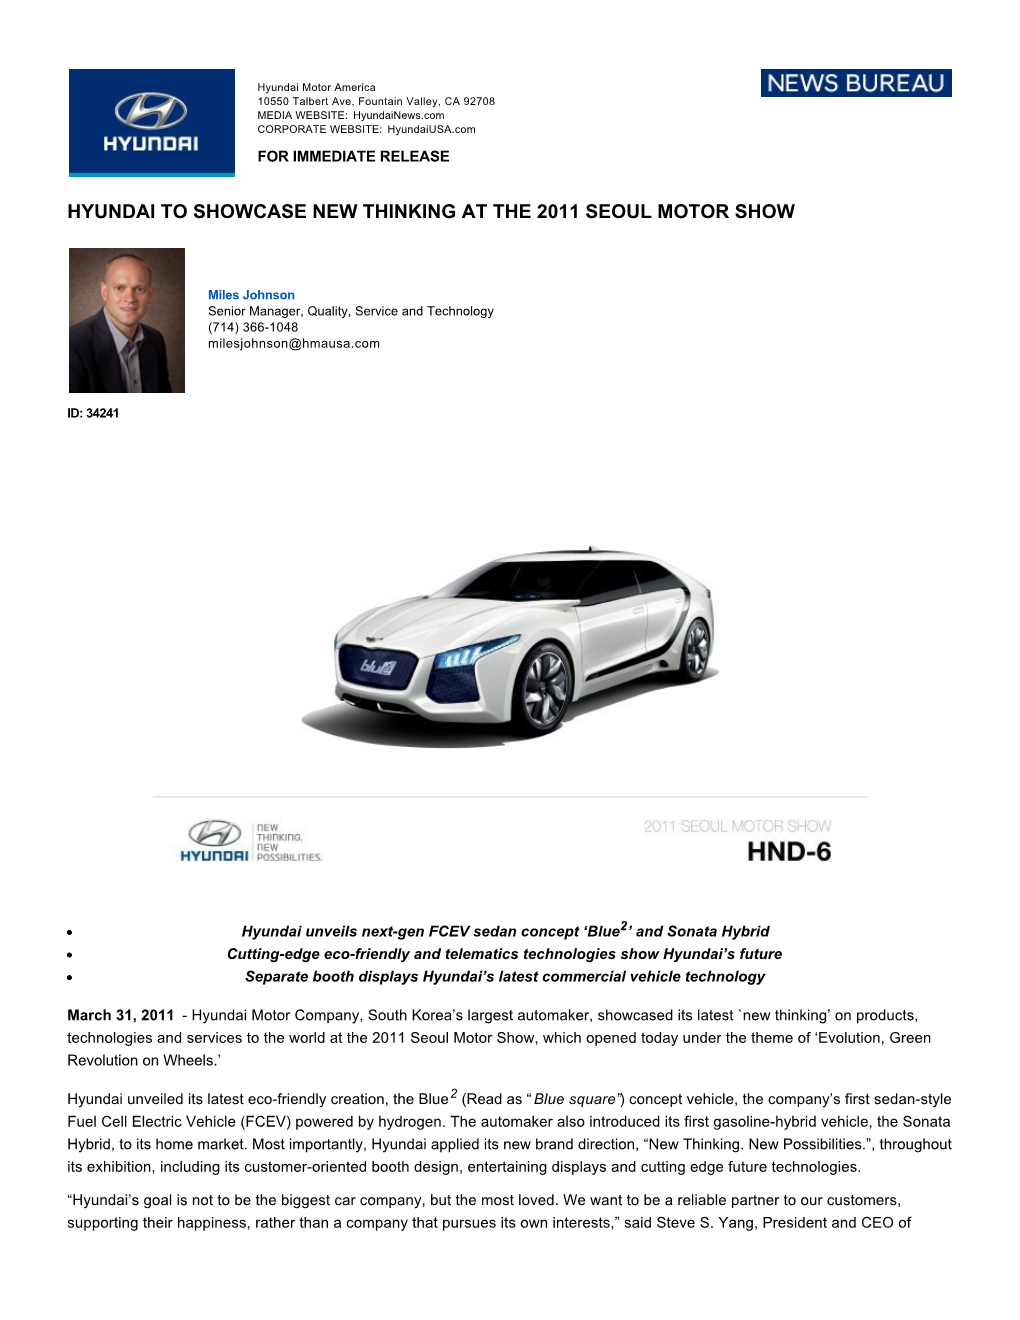 Hyundai to Showcase New Thinking at the 2011 Seoul Motor Show